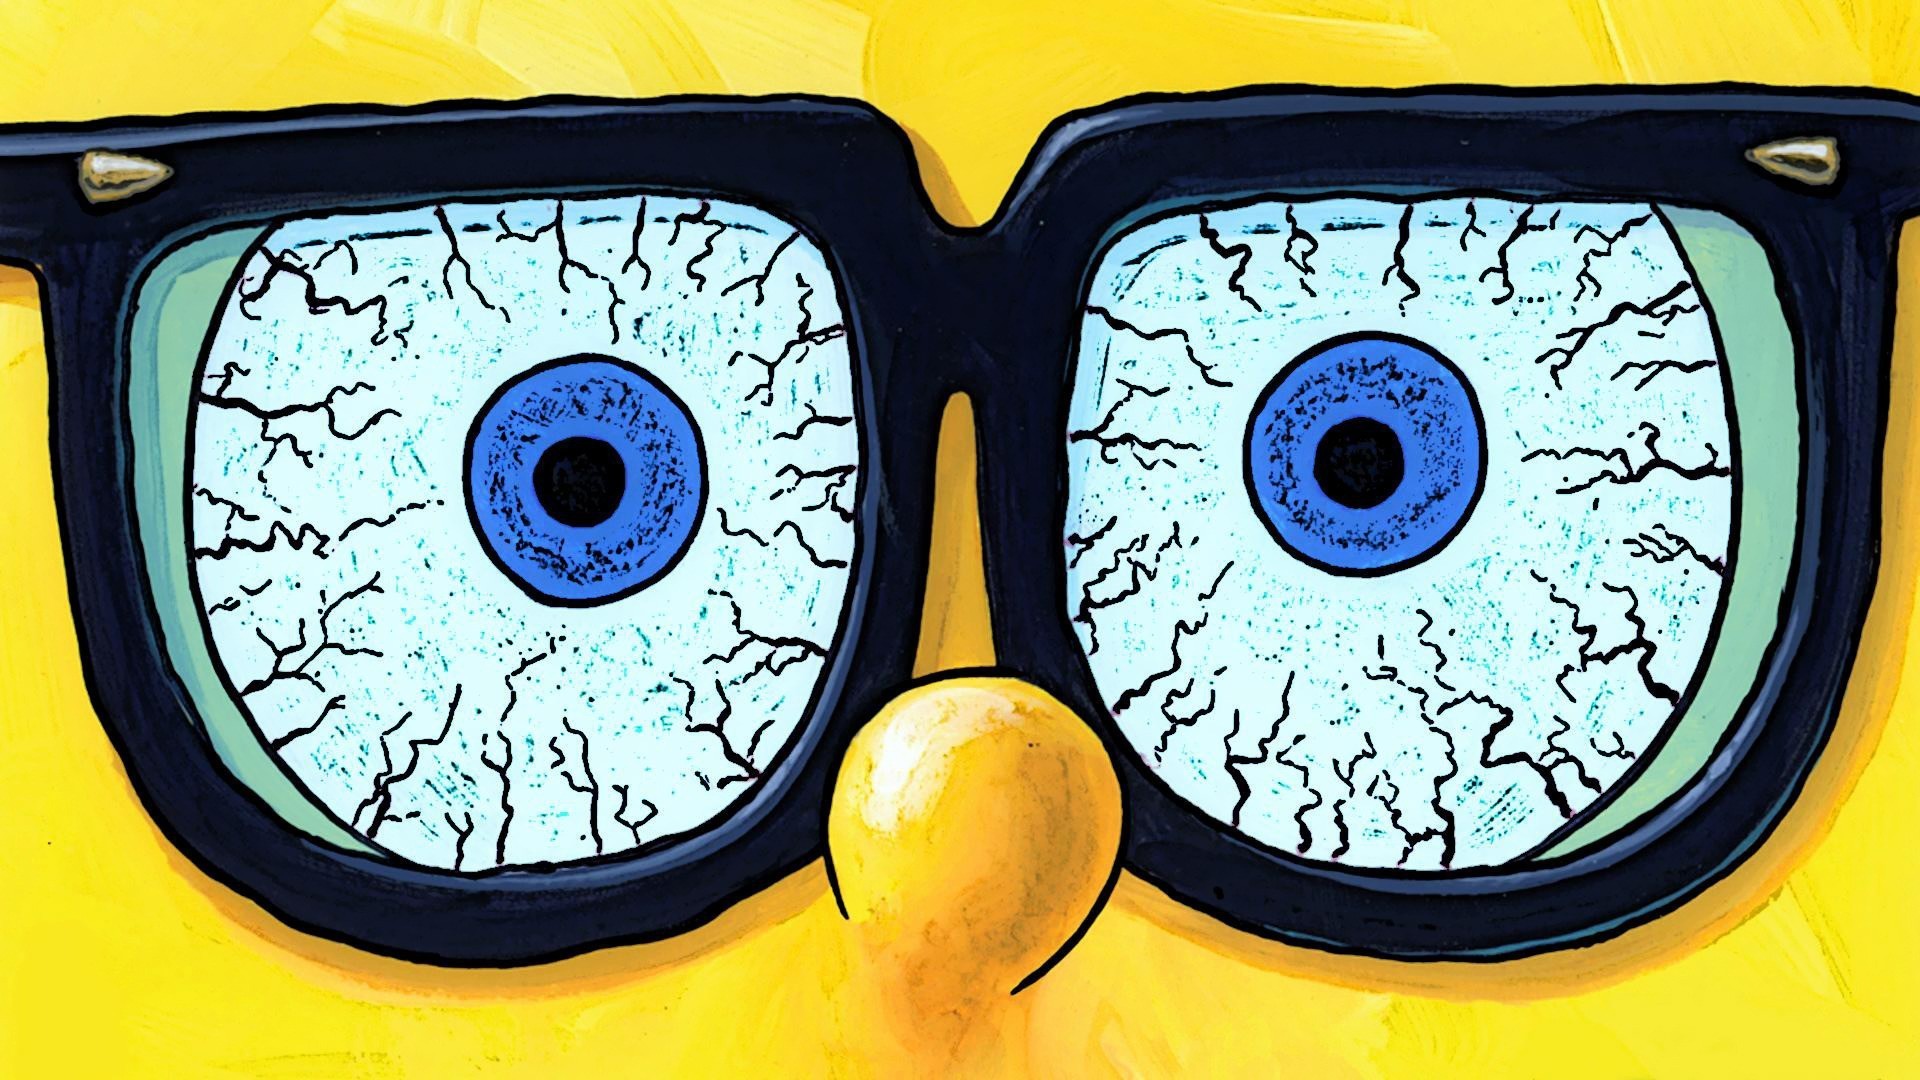 Smartphone Background humor, spongebob squarepants, tv show, funny